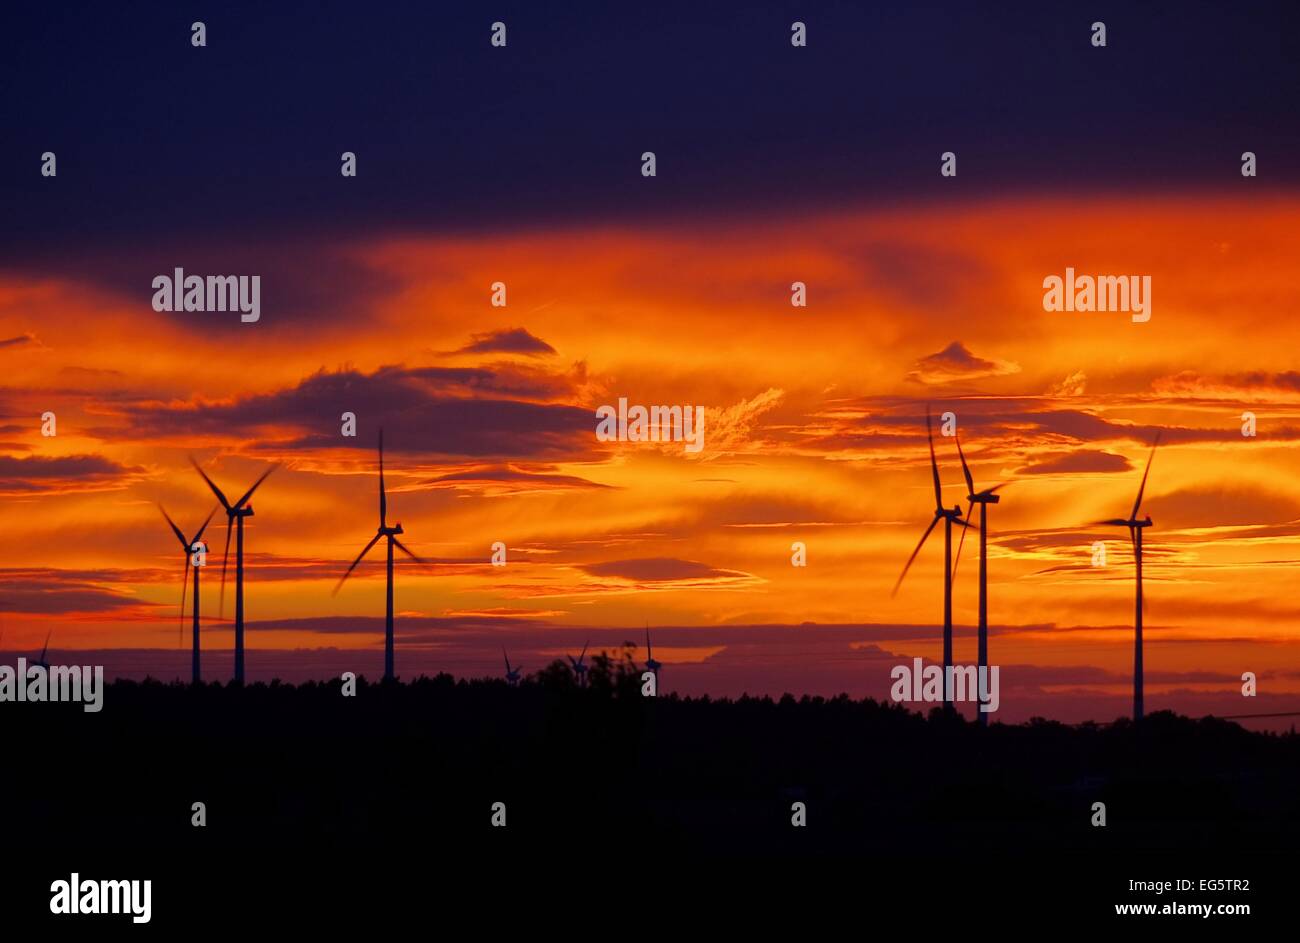 Windrad Sonnenuntergang - wind turbine sunset 01 Stock Photo